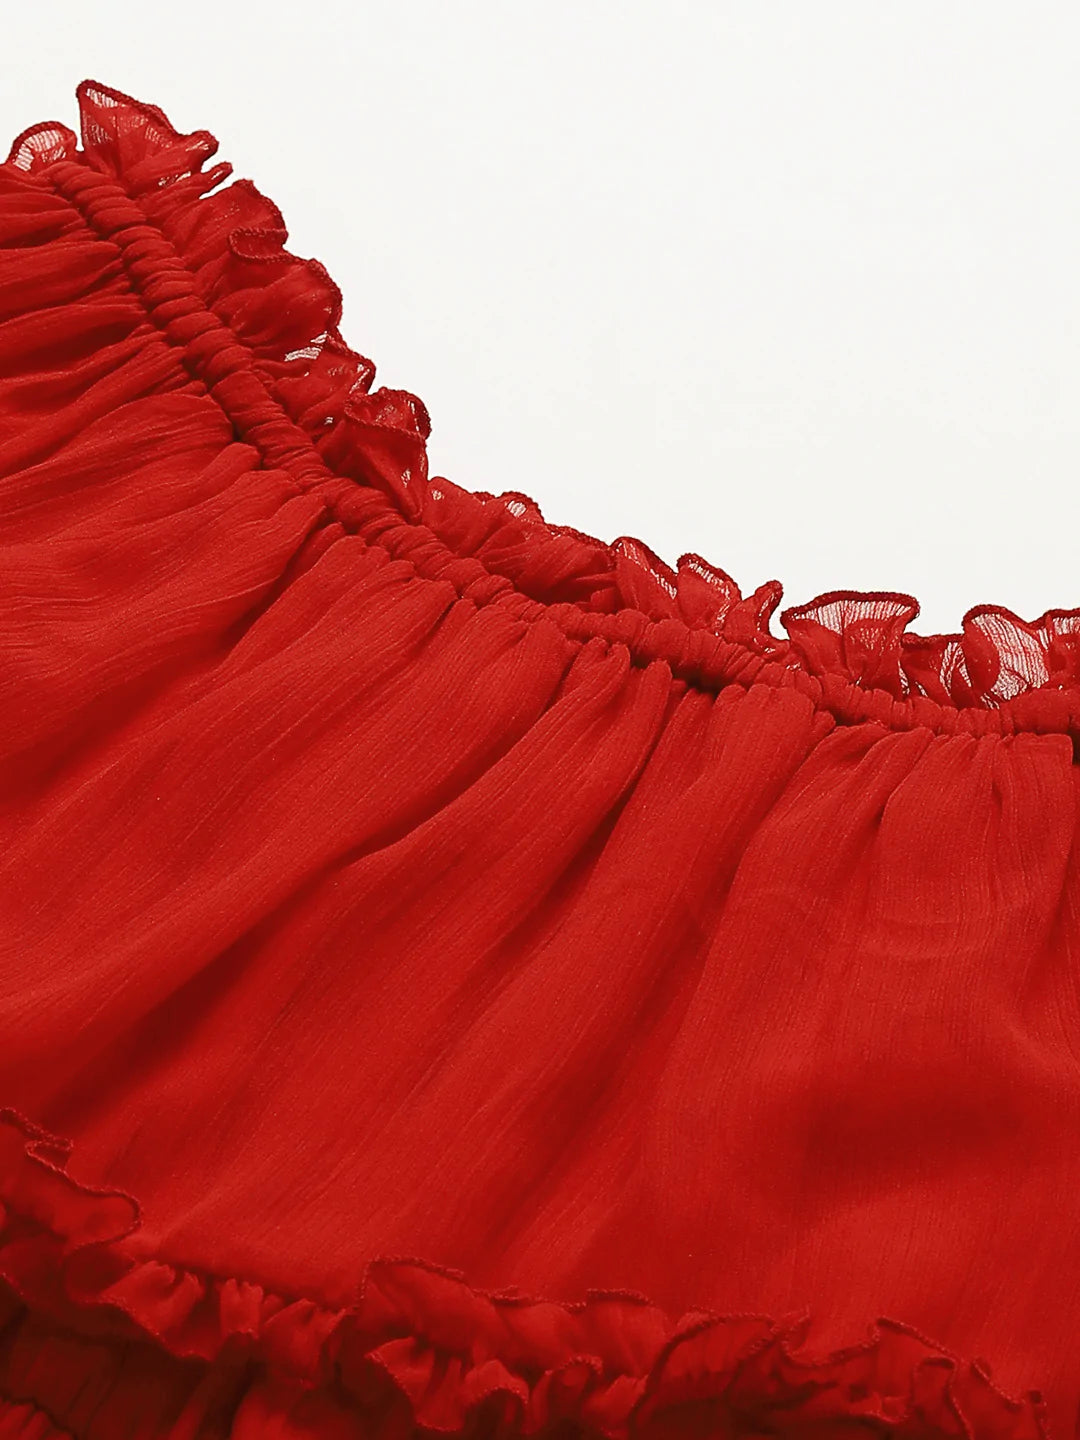 Red Chiffon Off Shoulder Midi Dress